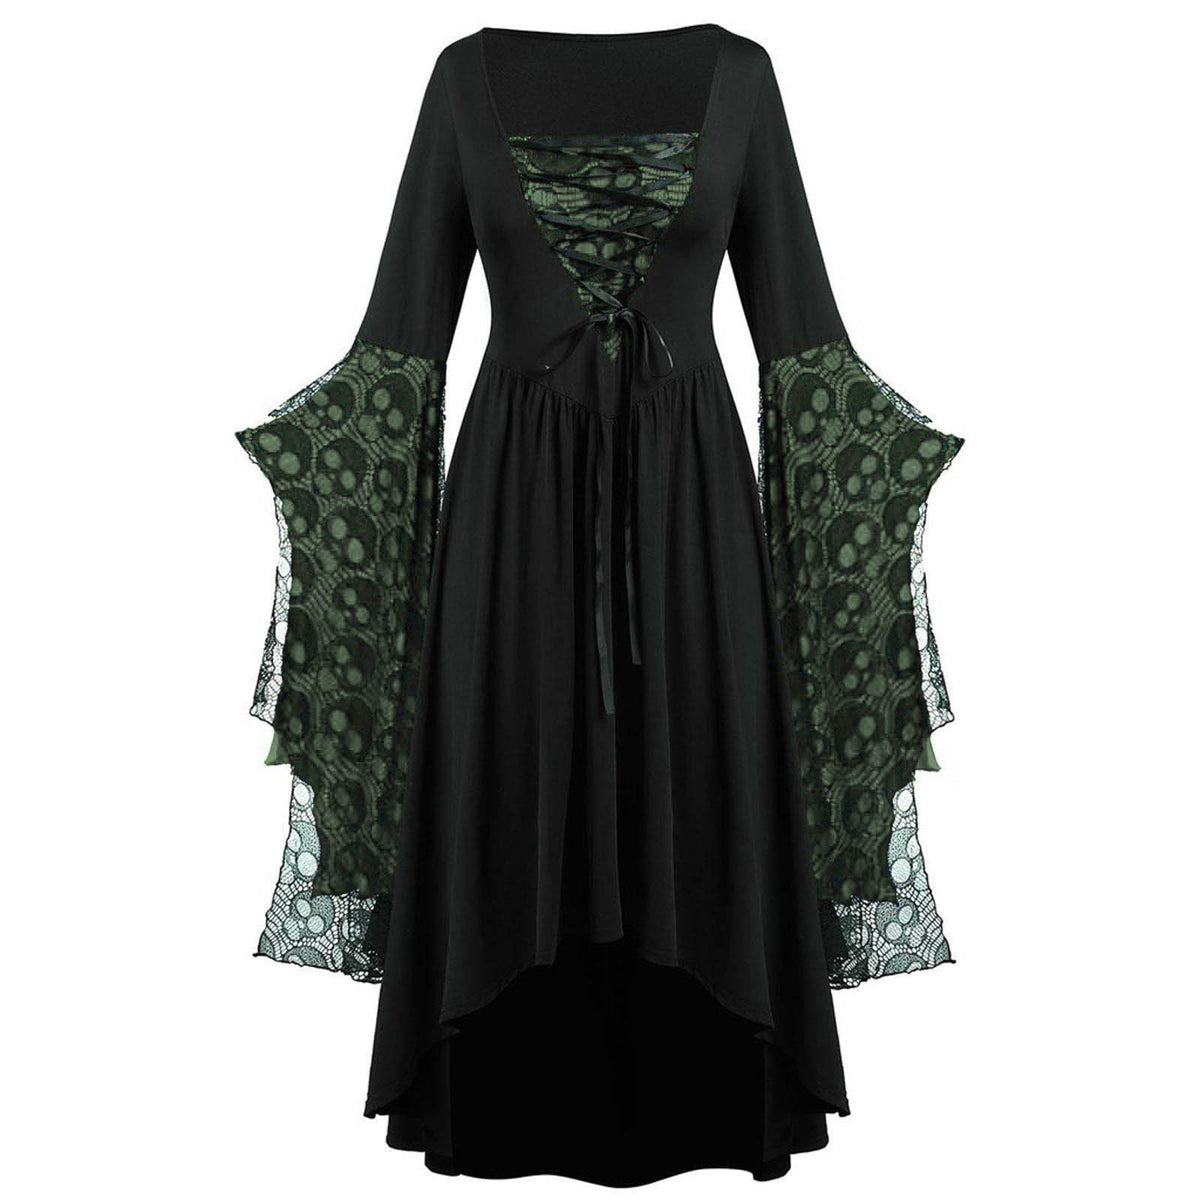 Lizakosht Halloween Cosplay Forest Fairy Elf Elven Costume Medieval Renaissance Pagan Celtic Gothic Dress Women Maxi Gown Outfit Plus Size